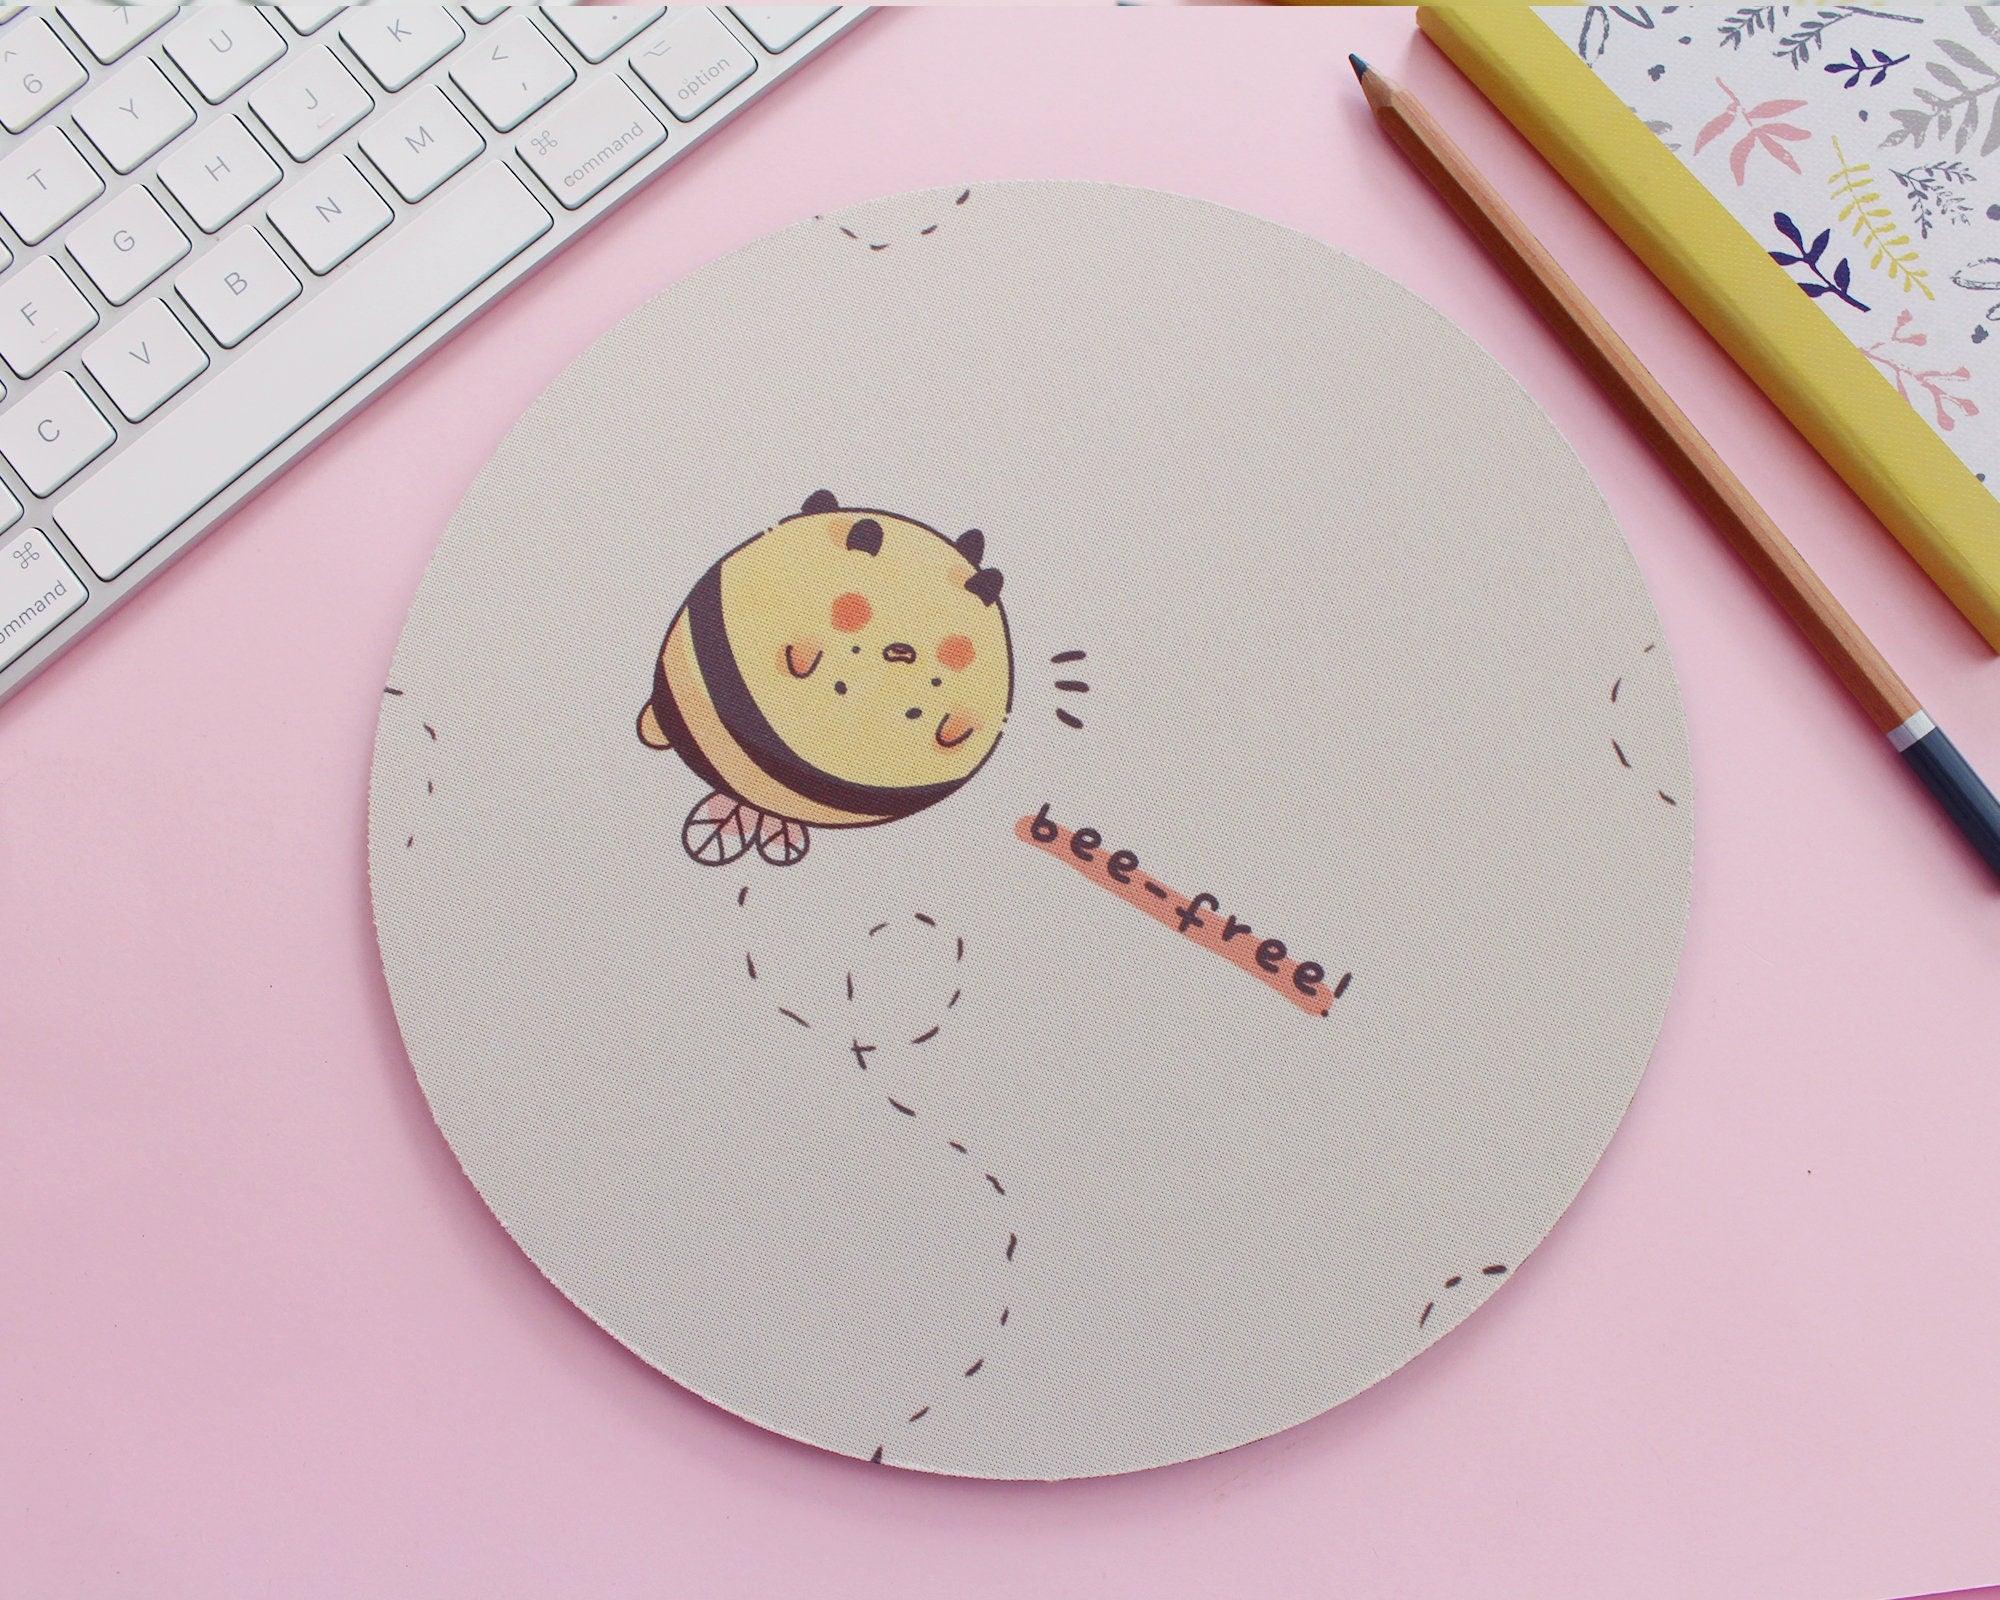 Kawaii Bumblebee Mouse Mat - Hand-printed original design to brighten up your workspace.